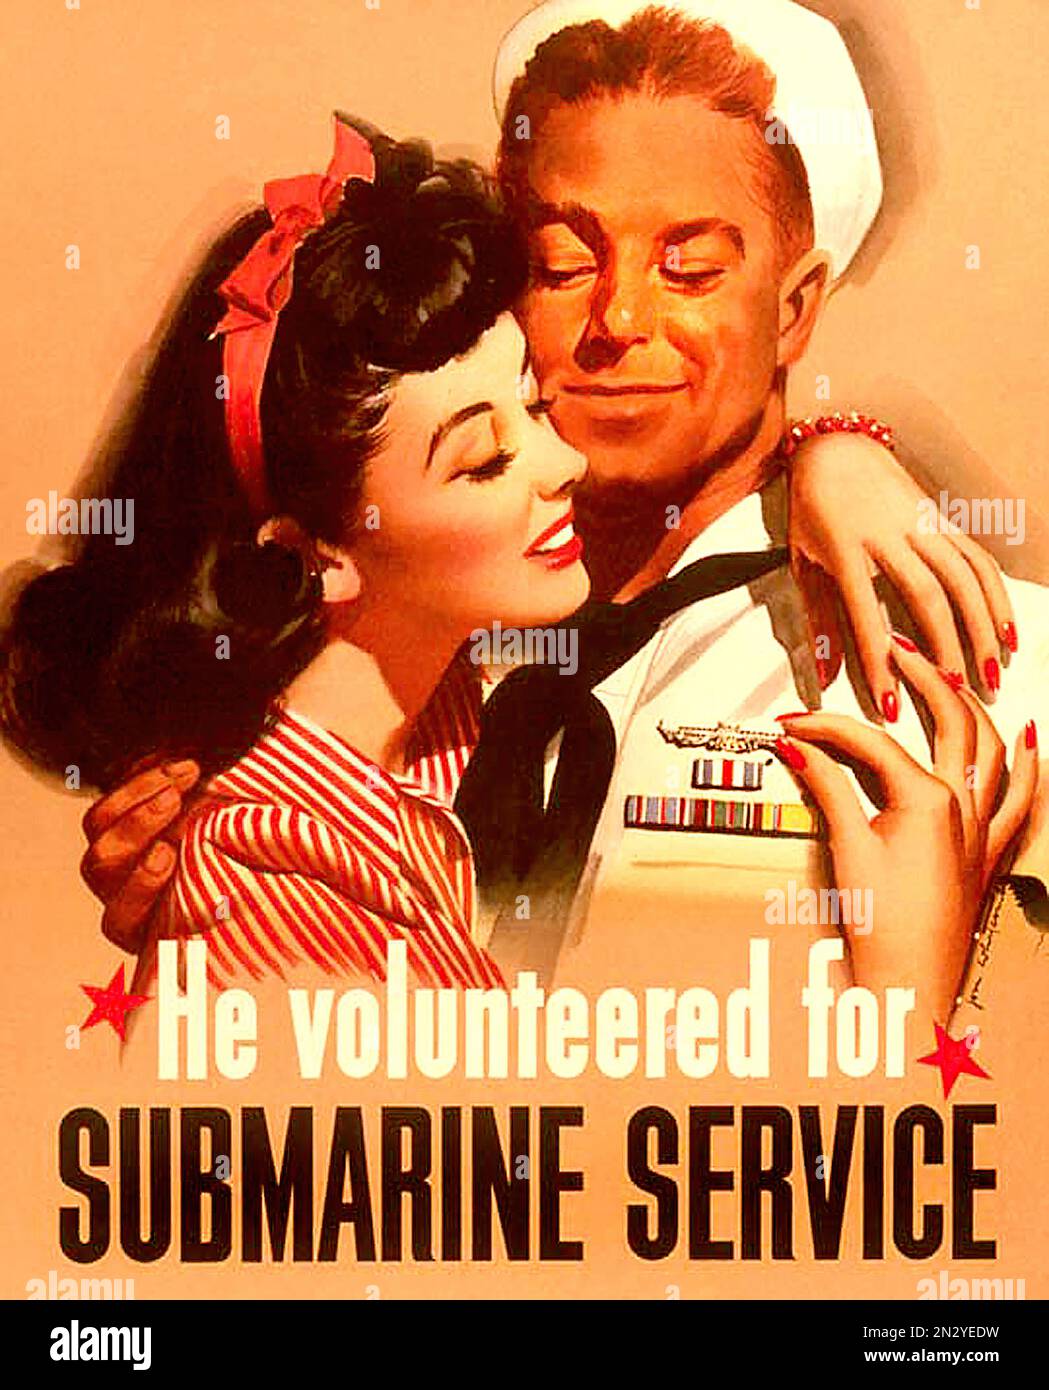 Volunteered for submarine service  - World War II - U.S propaganda Poster Stock Photo